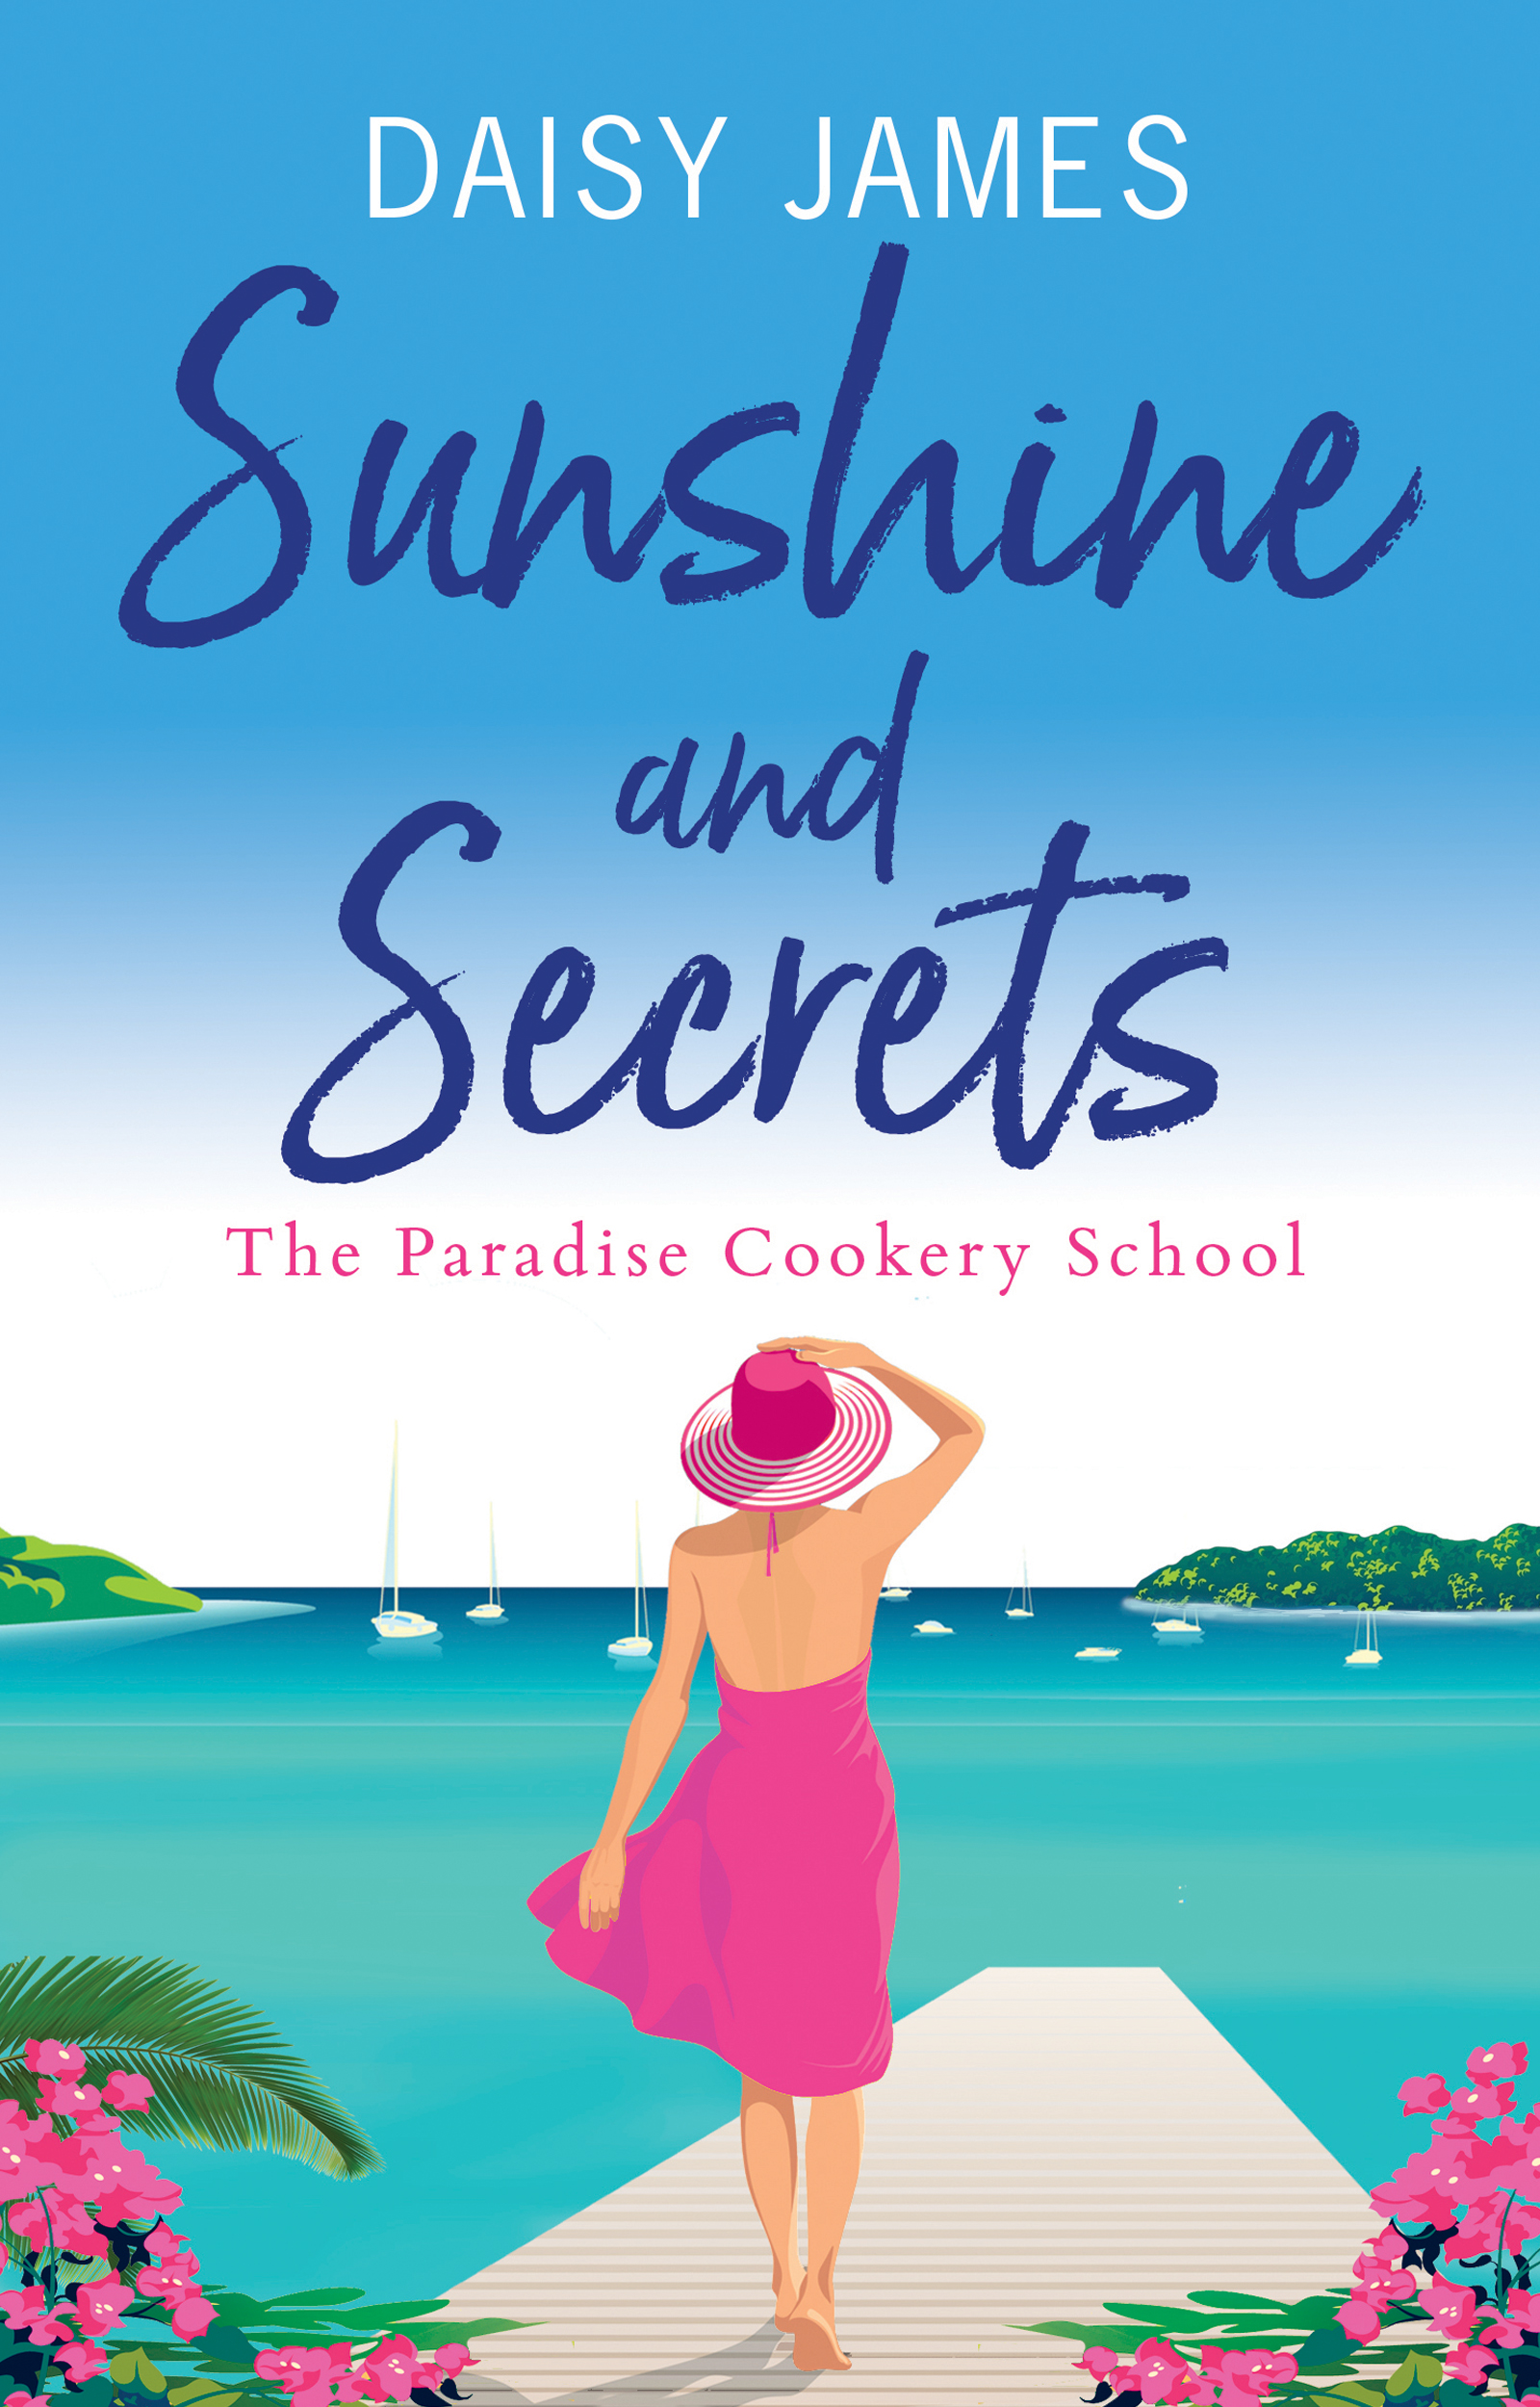 Sunshine & Secrets (The Paradise Cookery School Book 1)